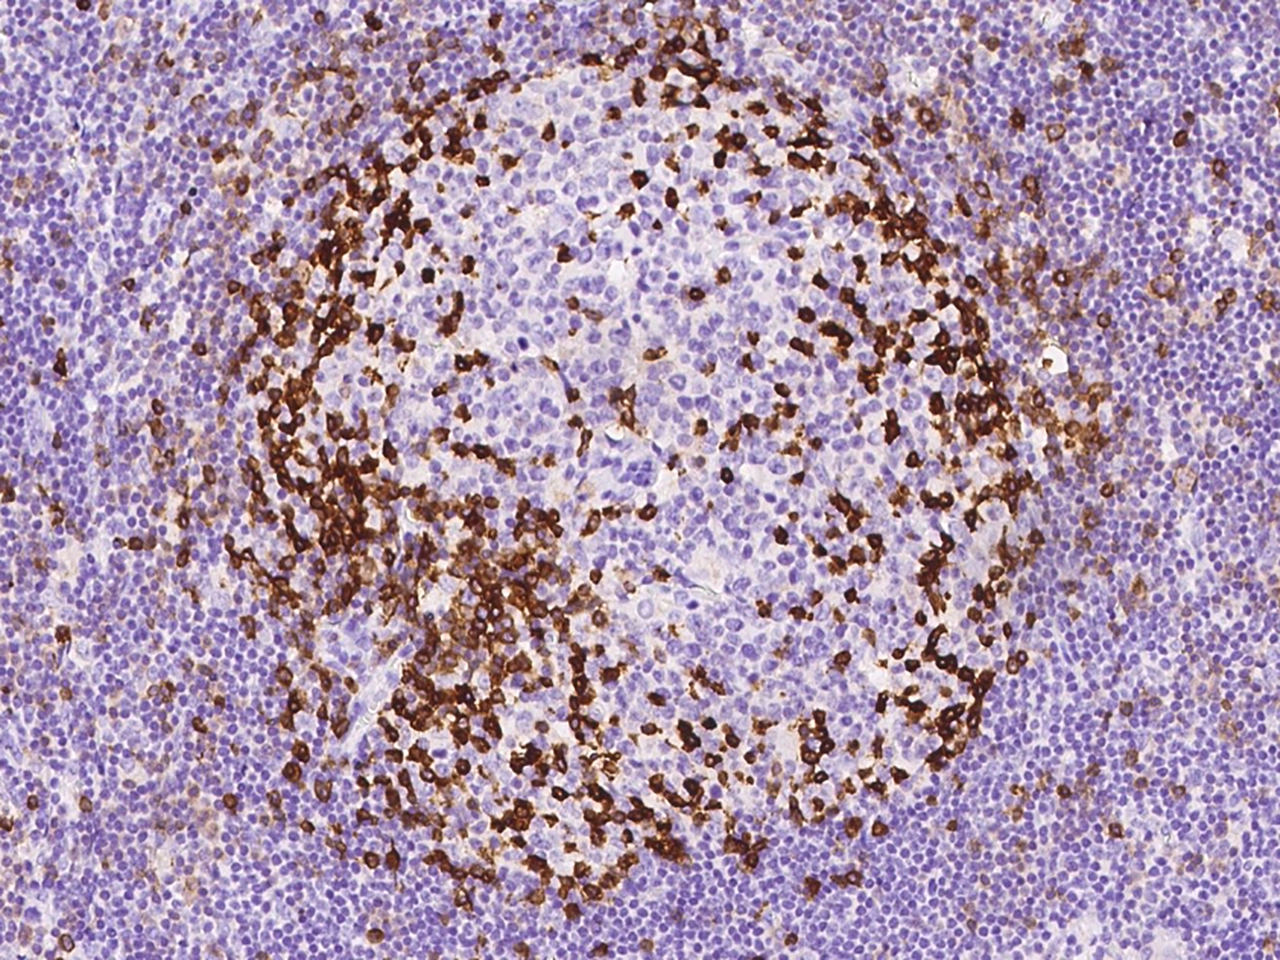 PD-1 Antibody, Mouse MAb